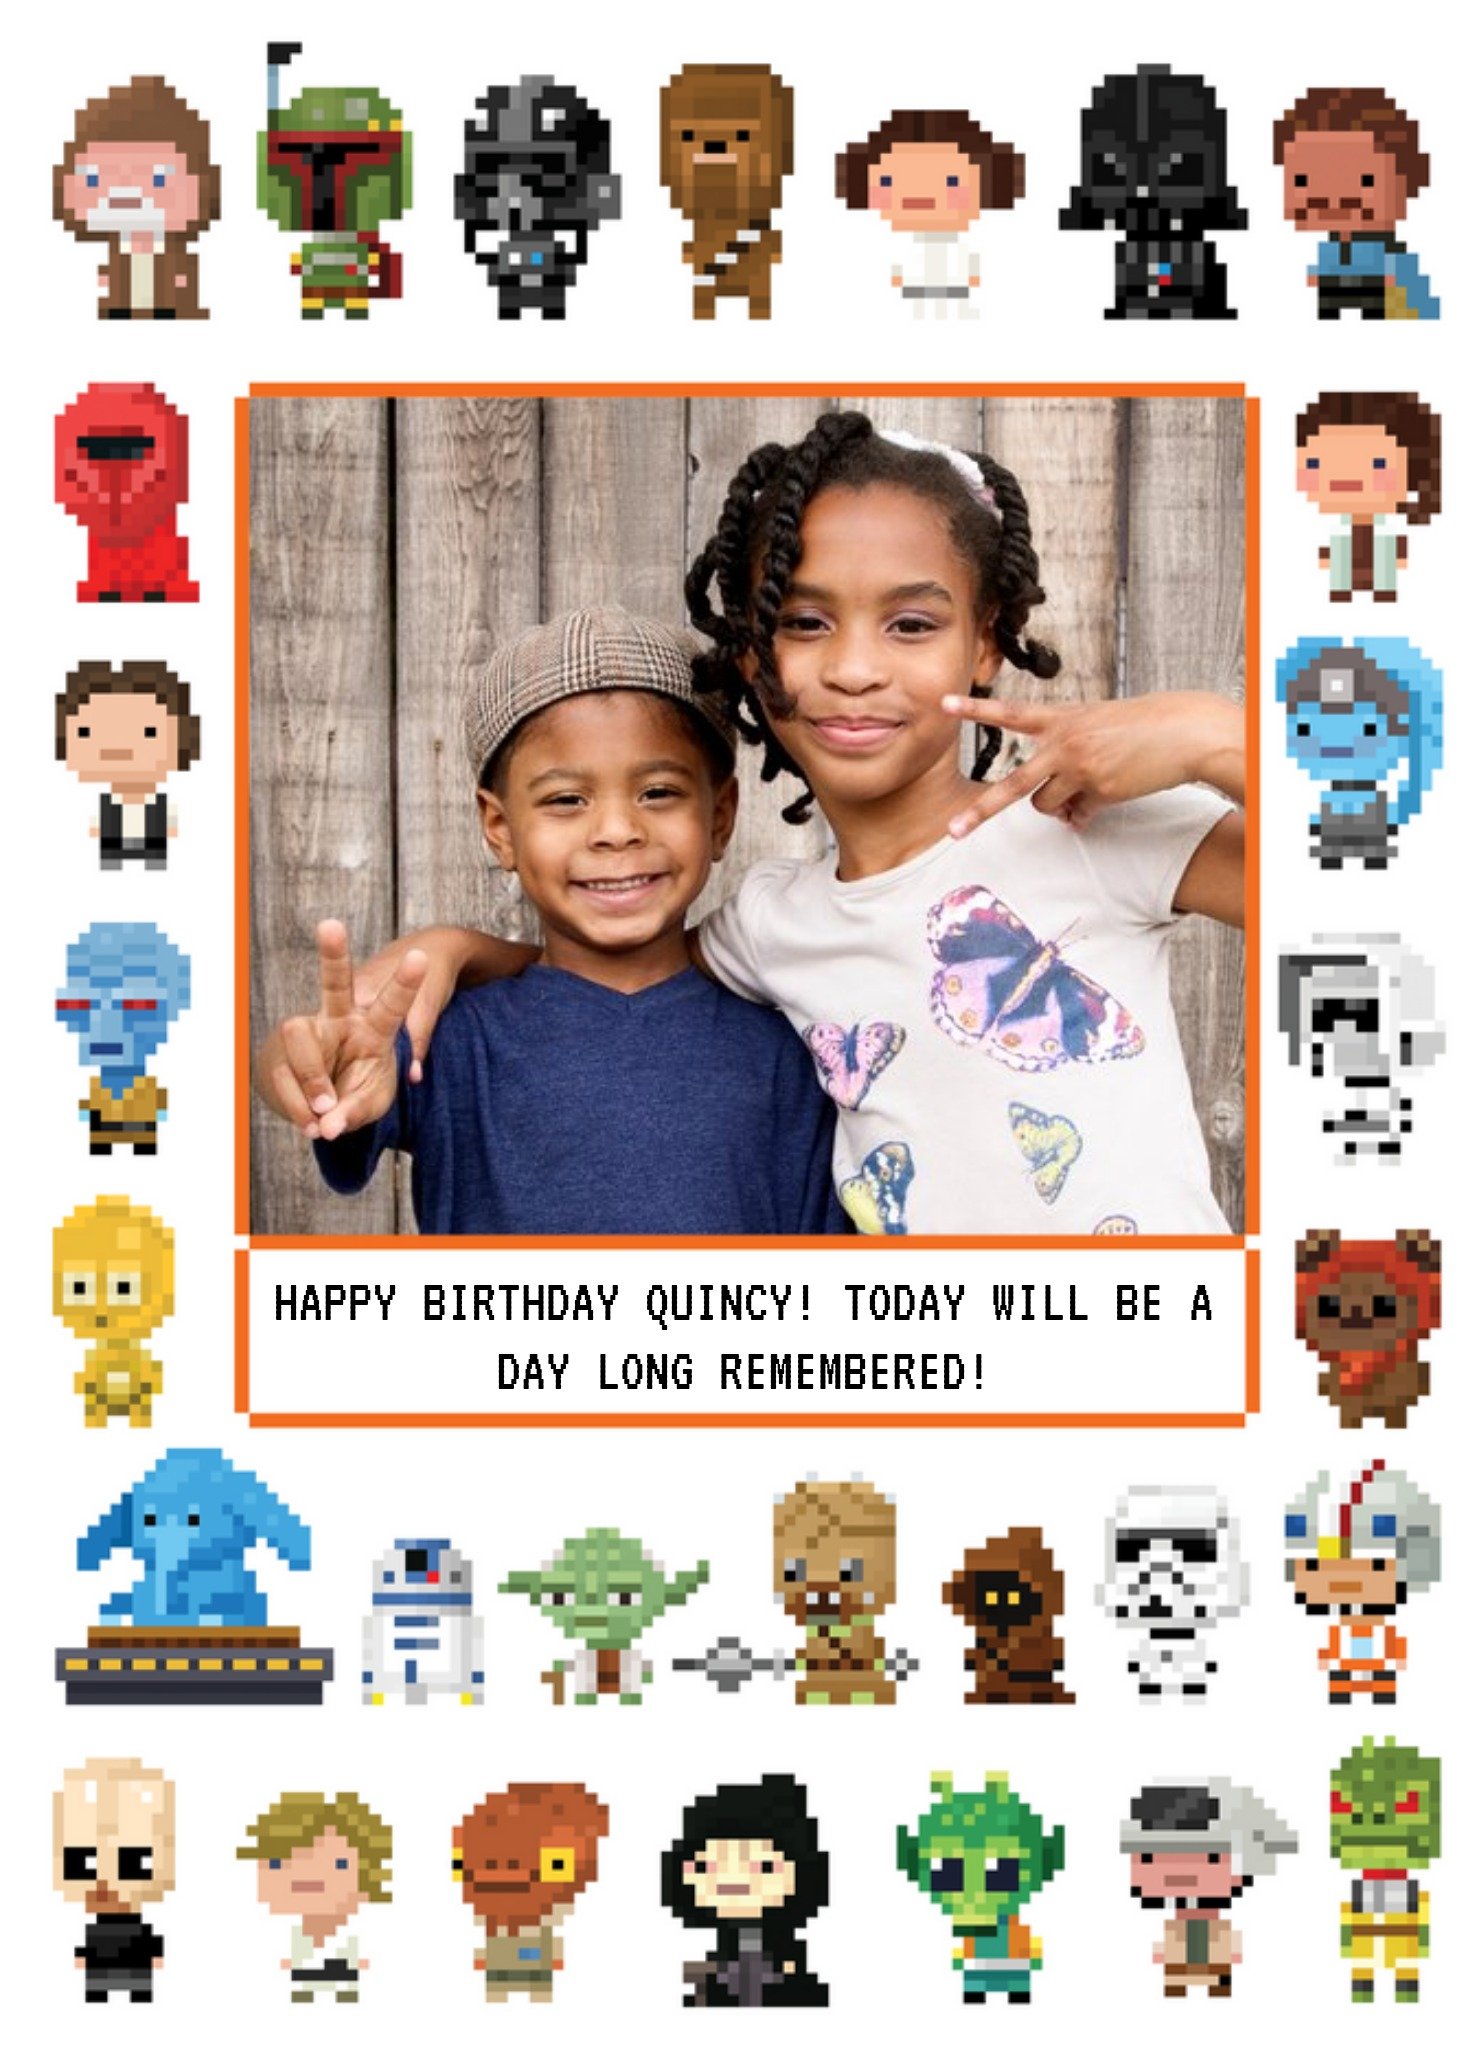 Disney Star Wars 8 Bit Gaming Photo Upload Birthday Card, Large